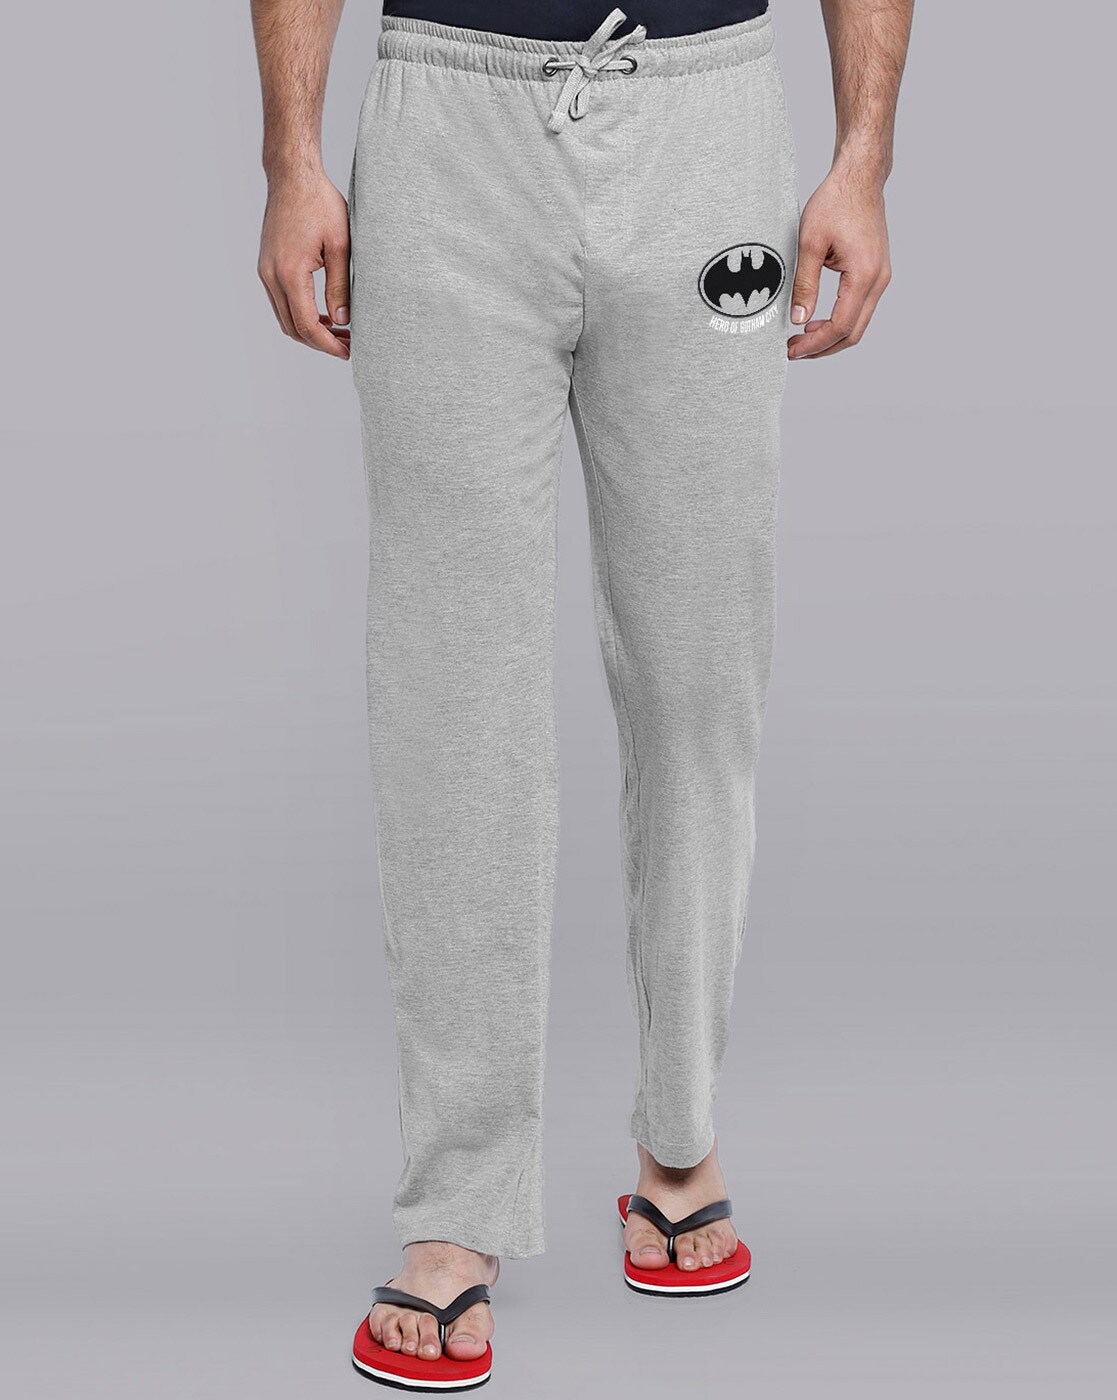 Amazon.com: DC Comics Justice League Batman Toddler Boys Pajama Shirts Pants  Gray/blue/Black 2T: Clothing, Shoes & Jewelry